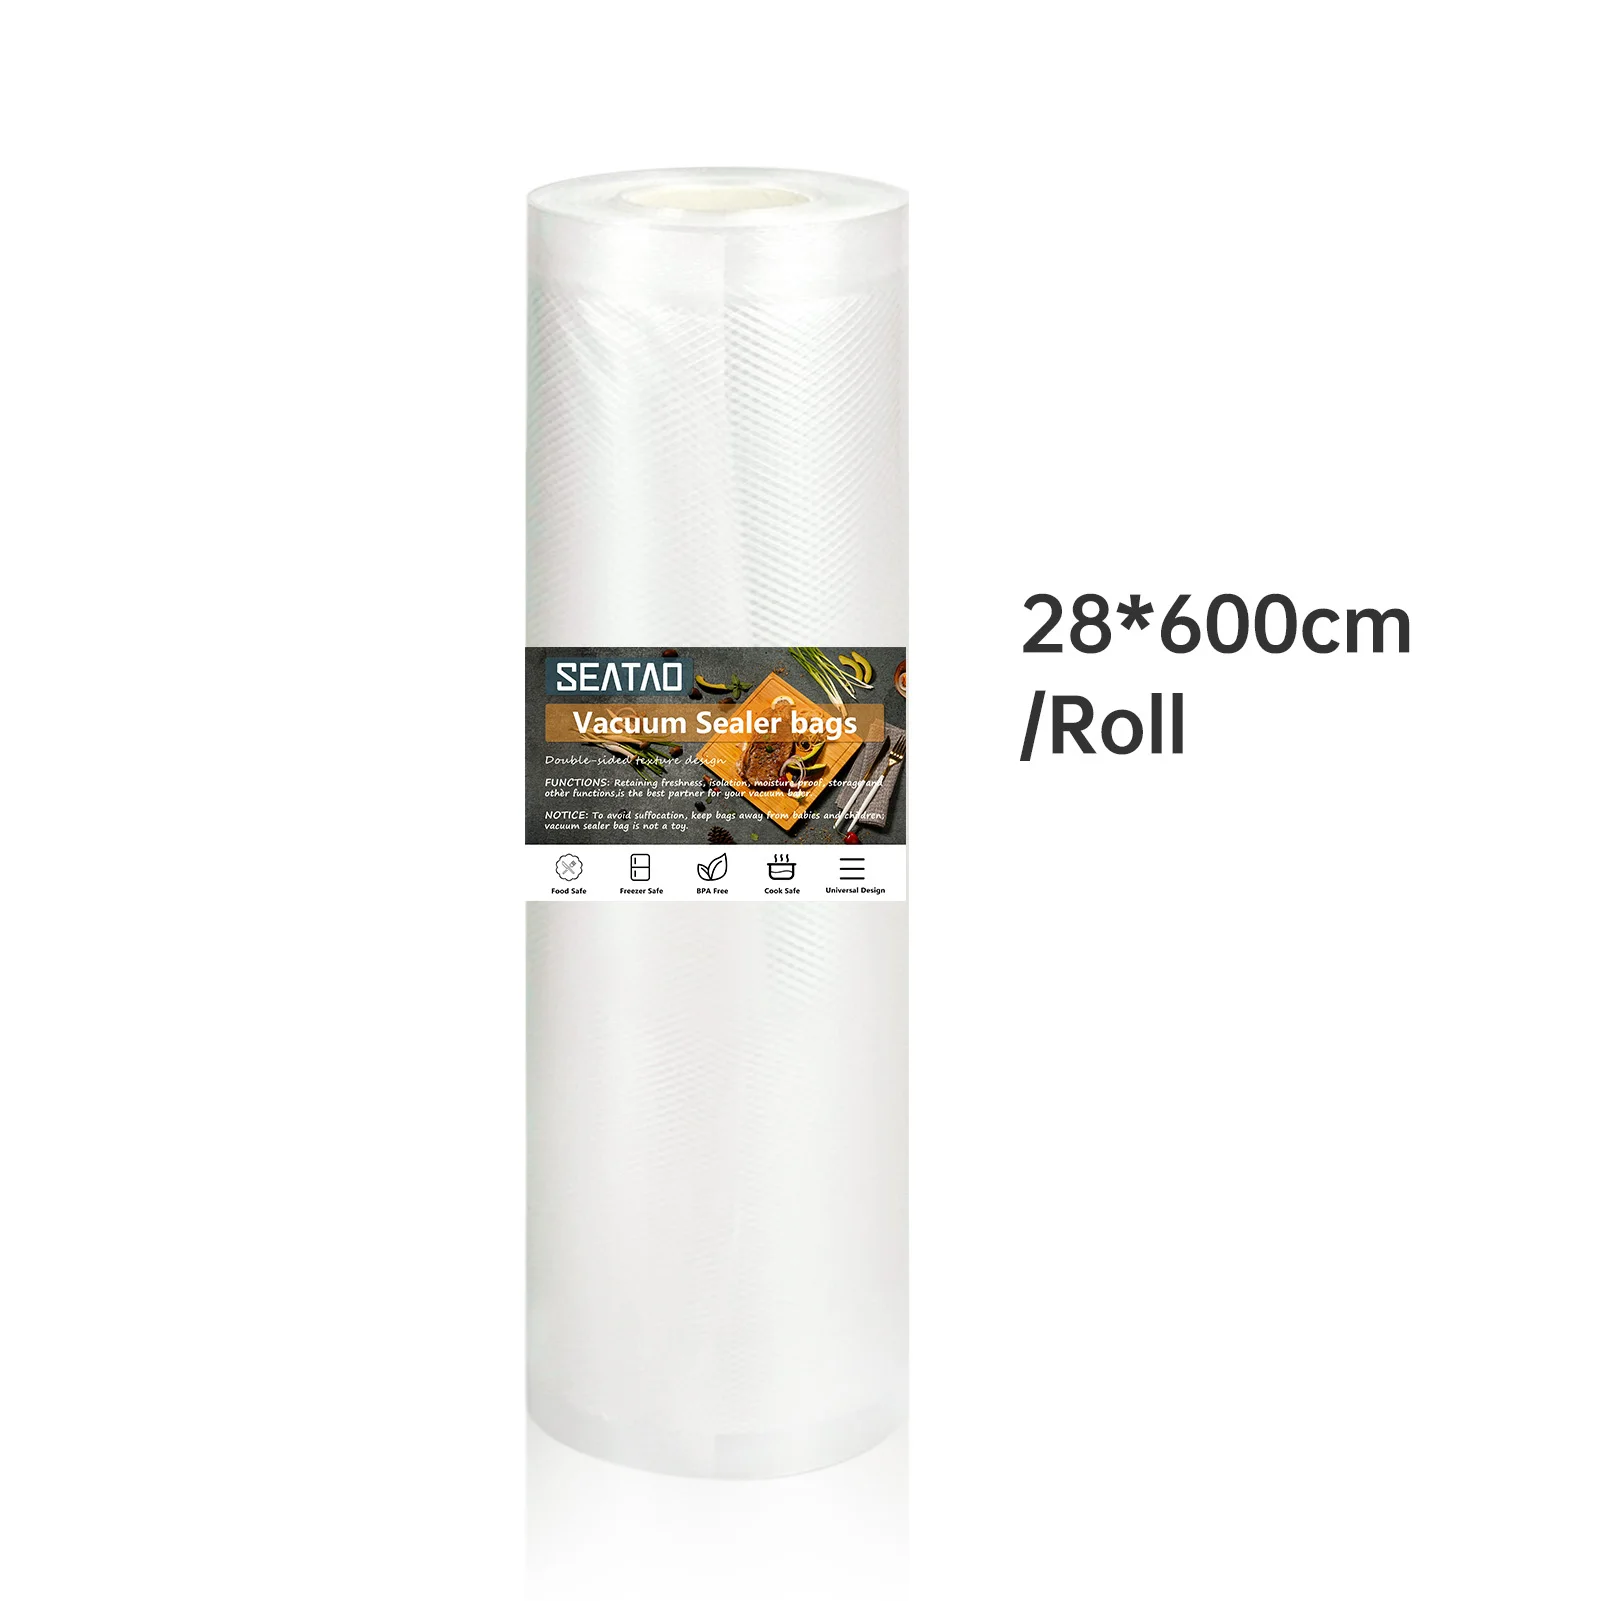 28x600cm 1 Roll